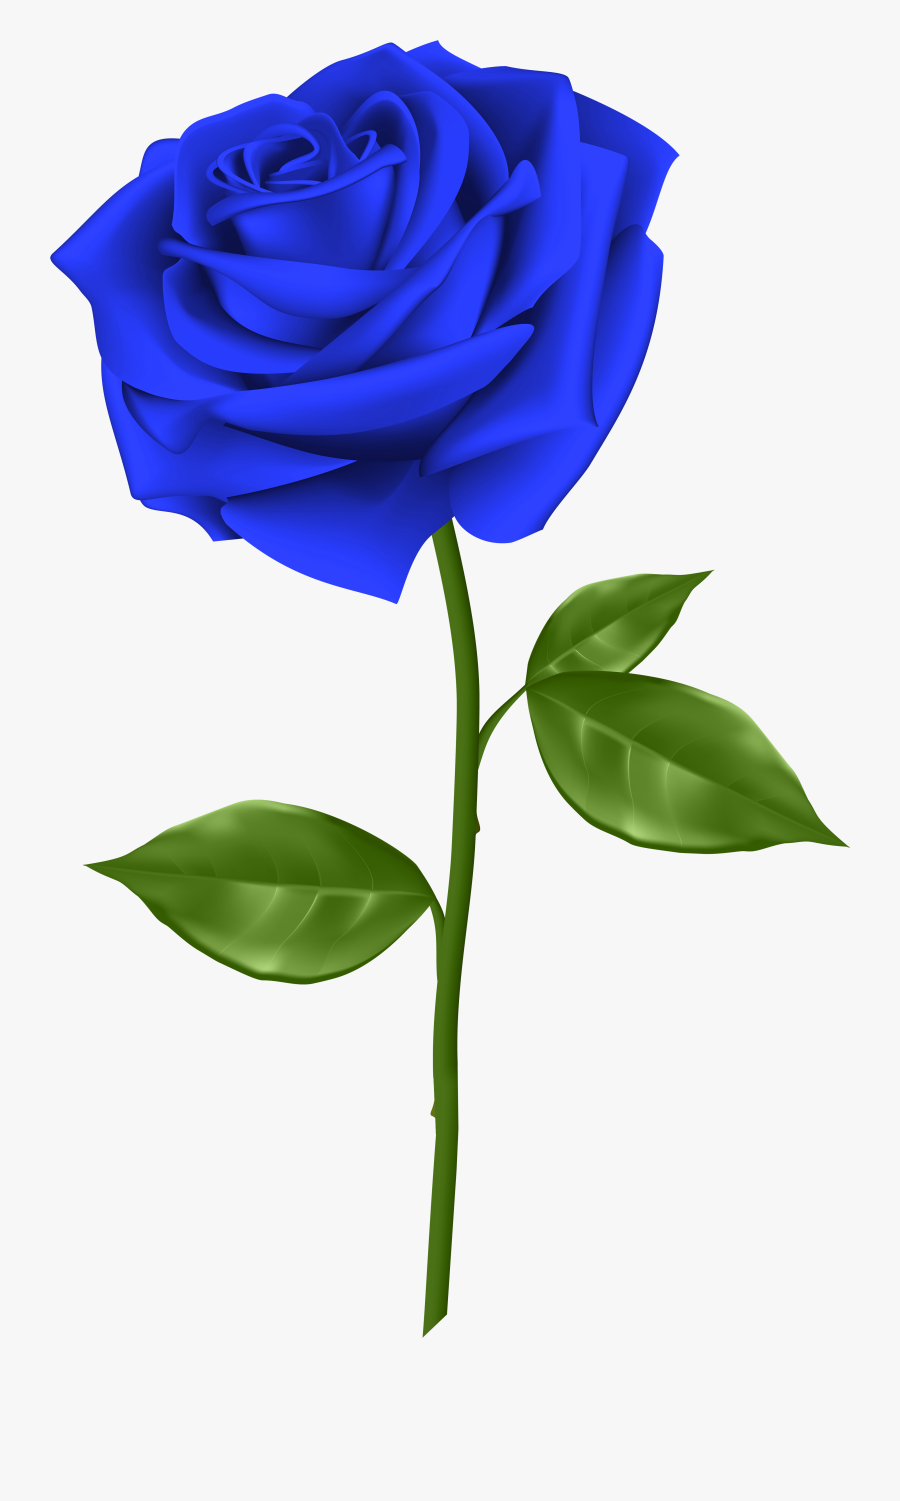 Rose Clipart Blue - Blue Rose Transparent Background, Transparent Clipart